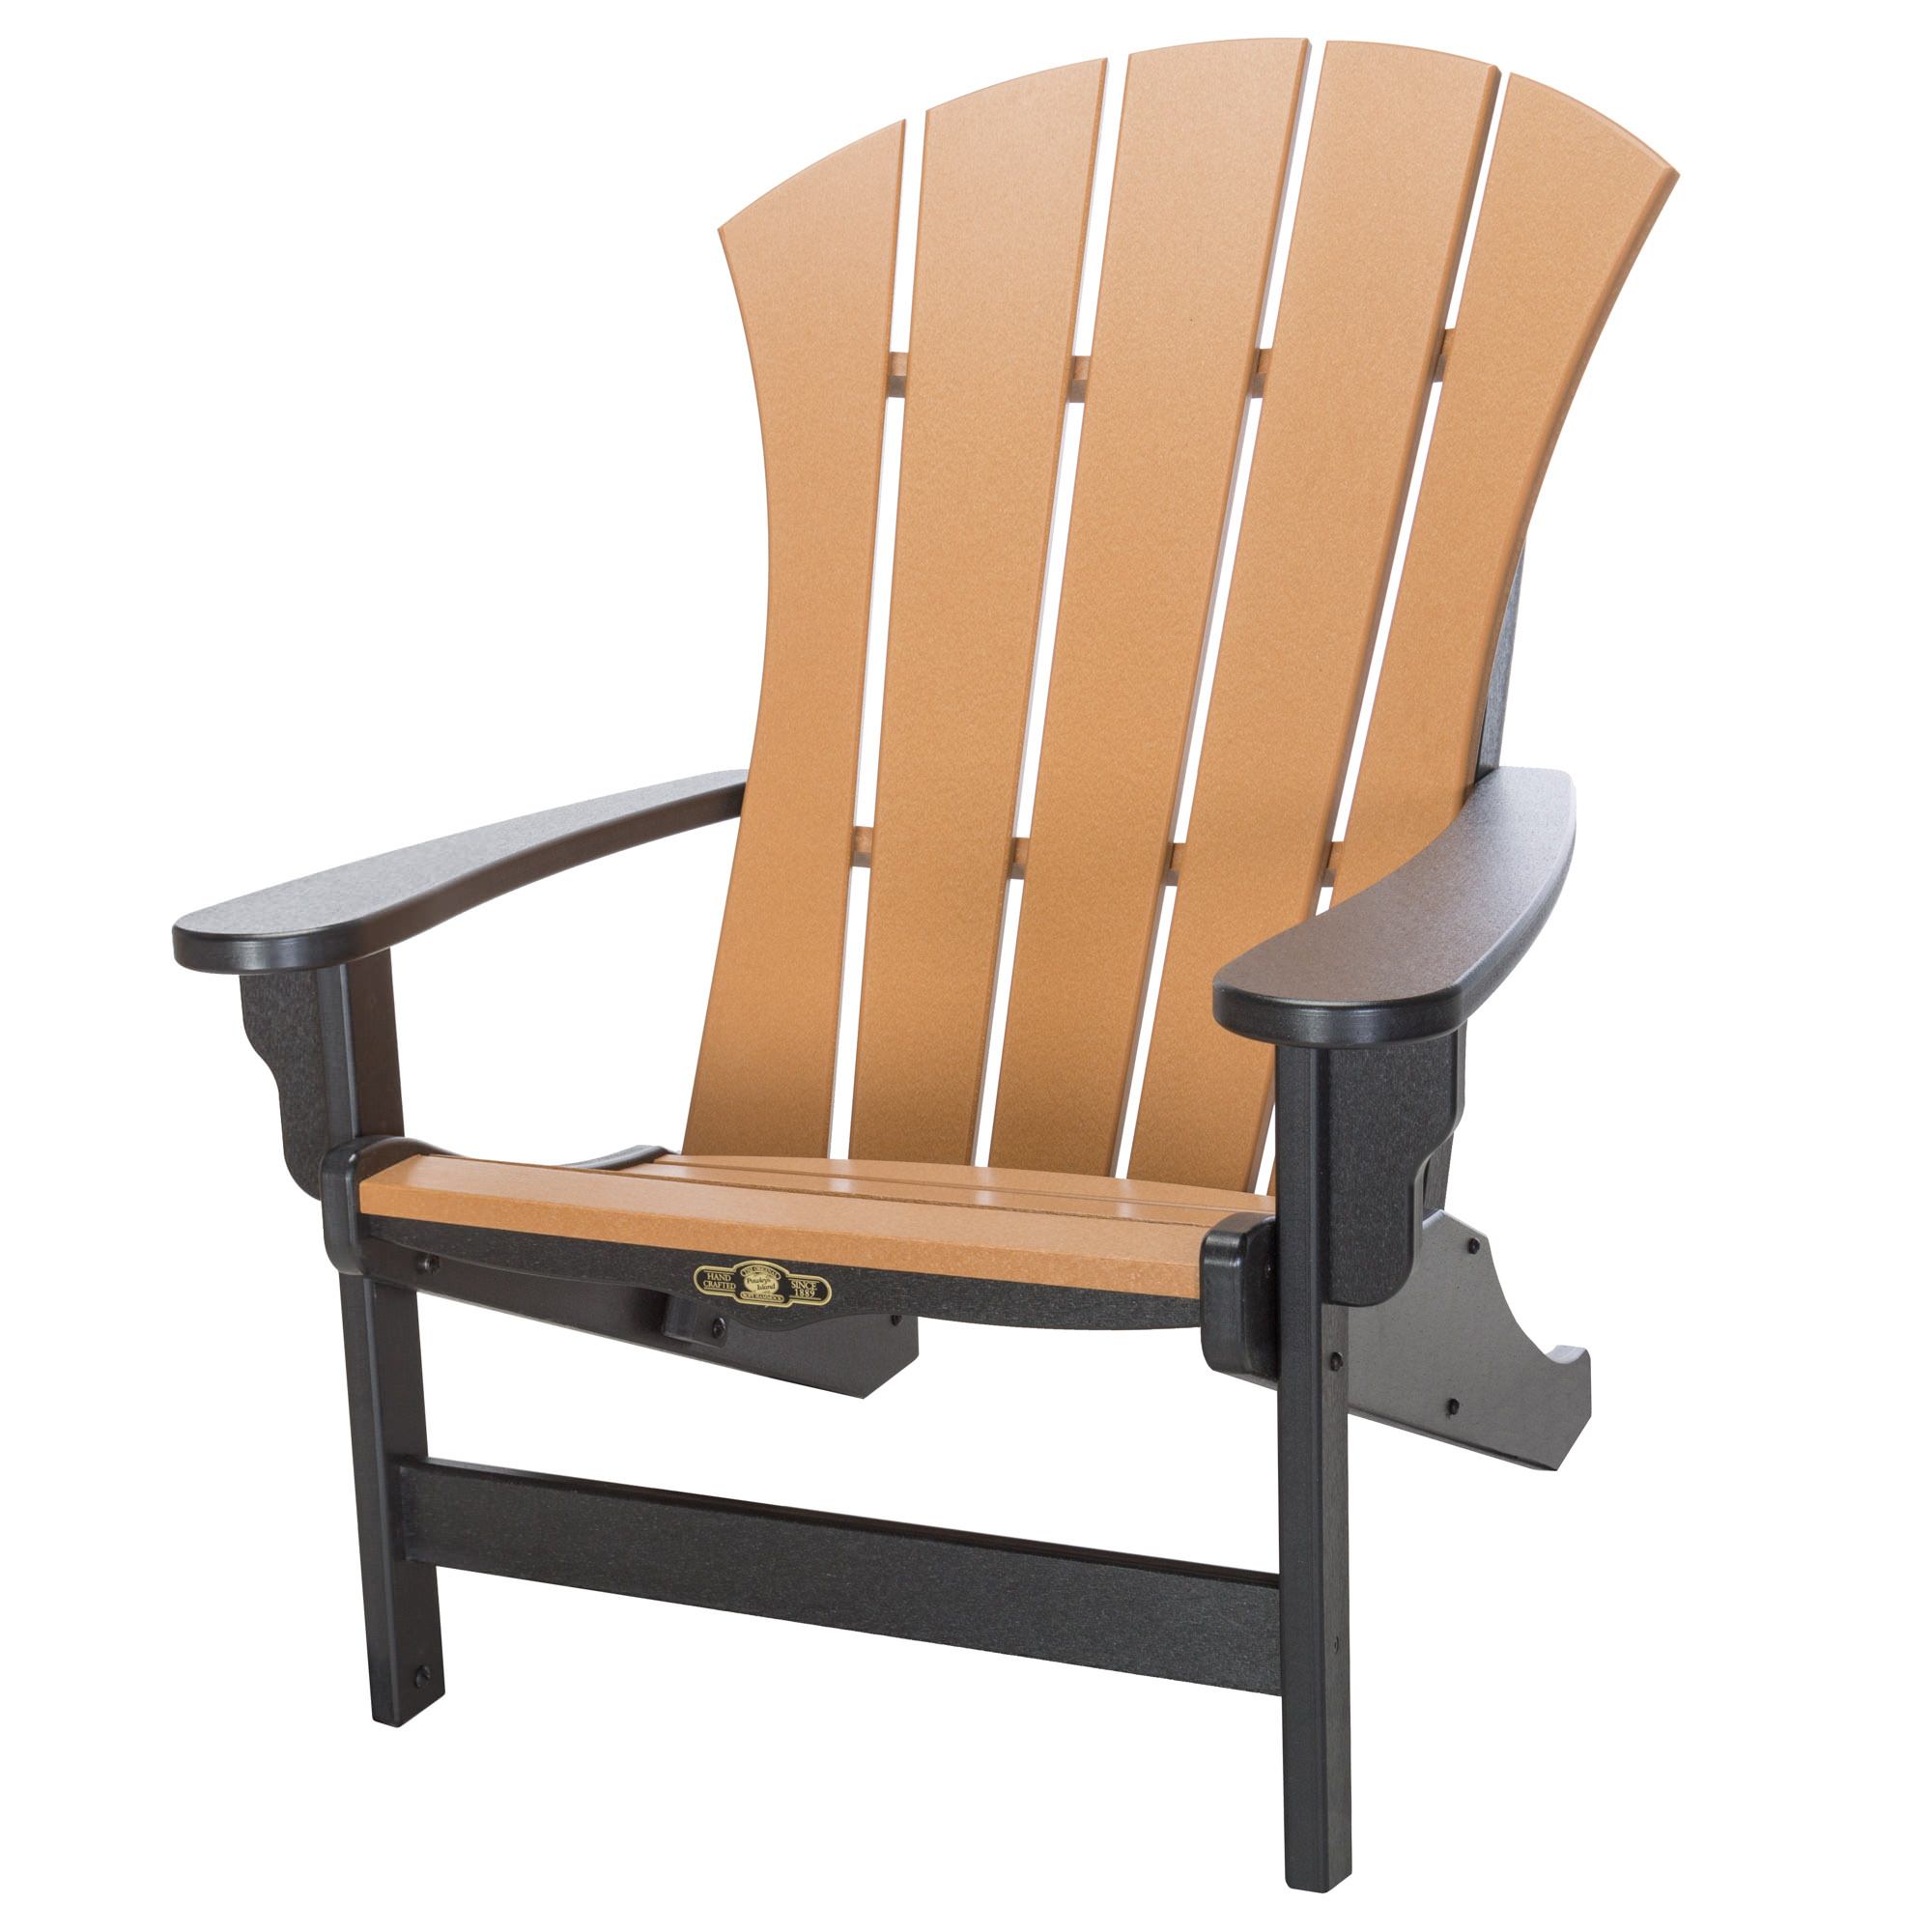 Durawood Sunrise Adirondack Chair | Pawleys Island Hammocks